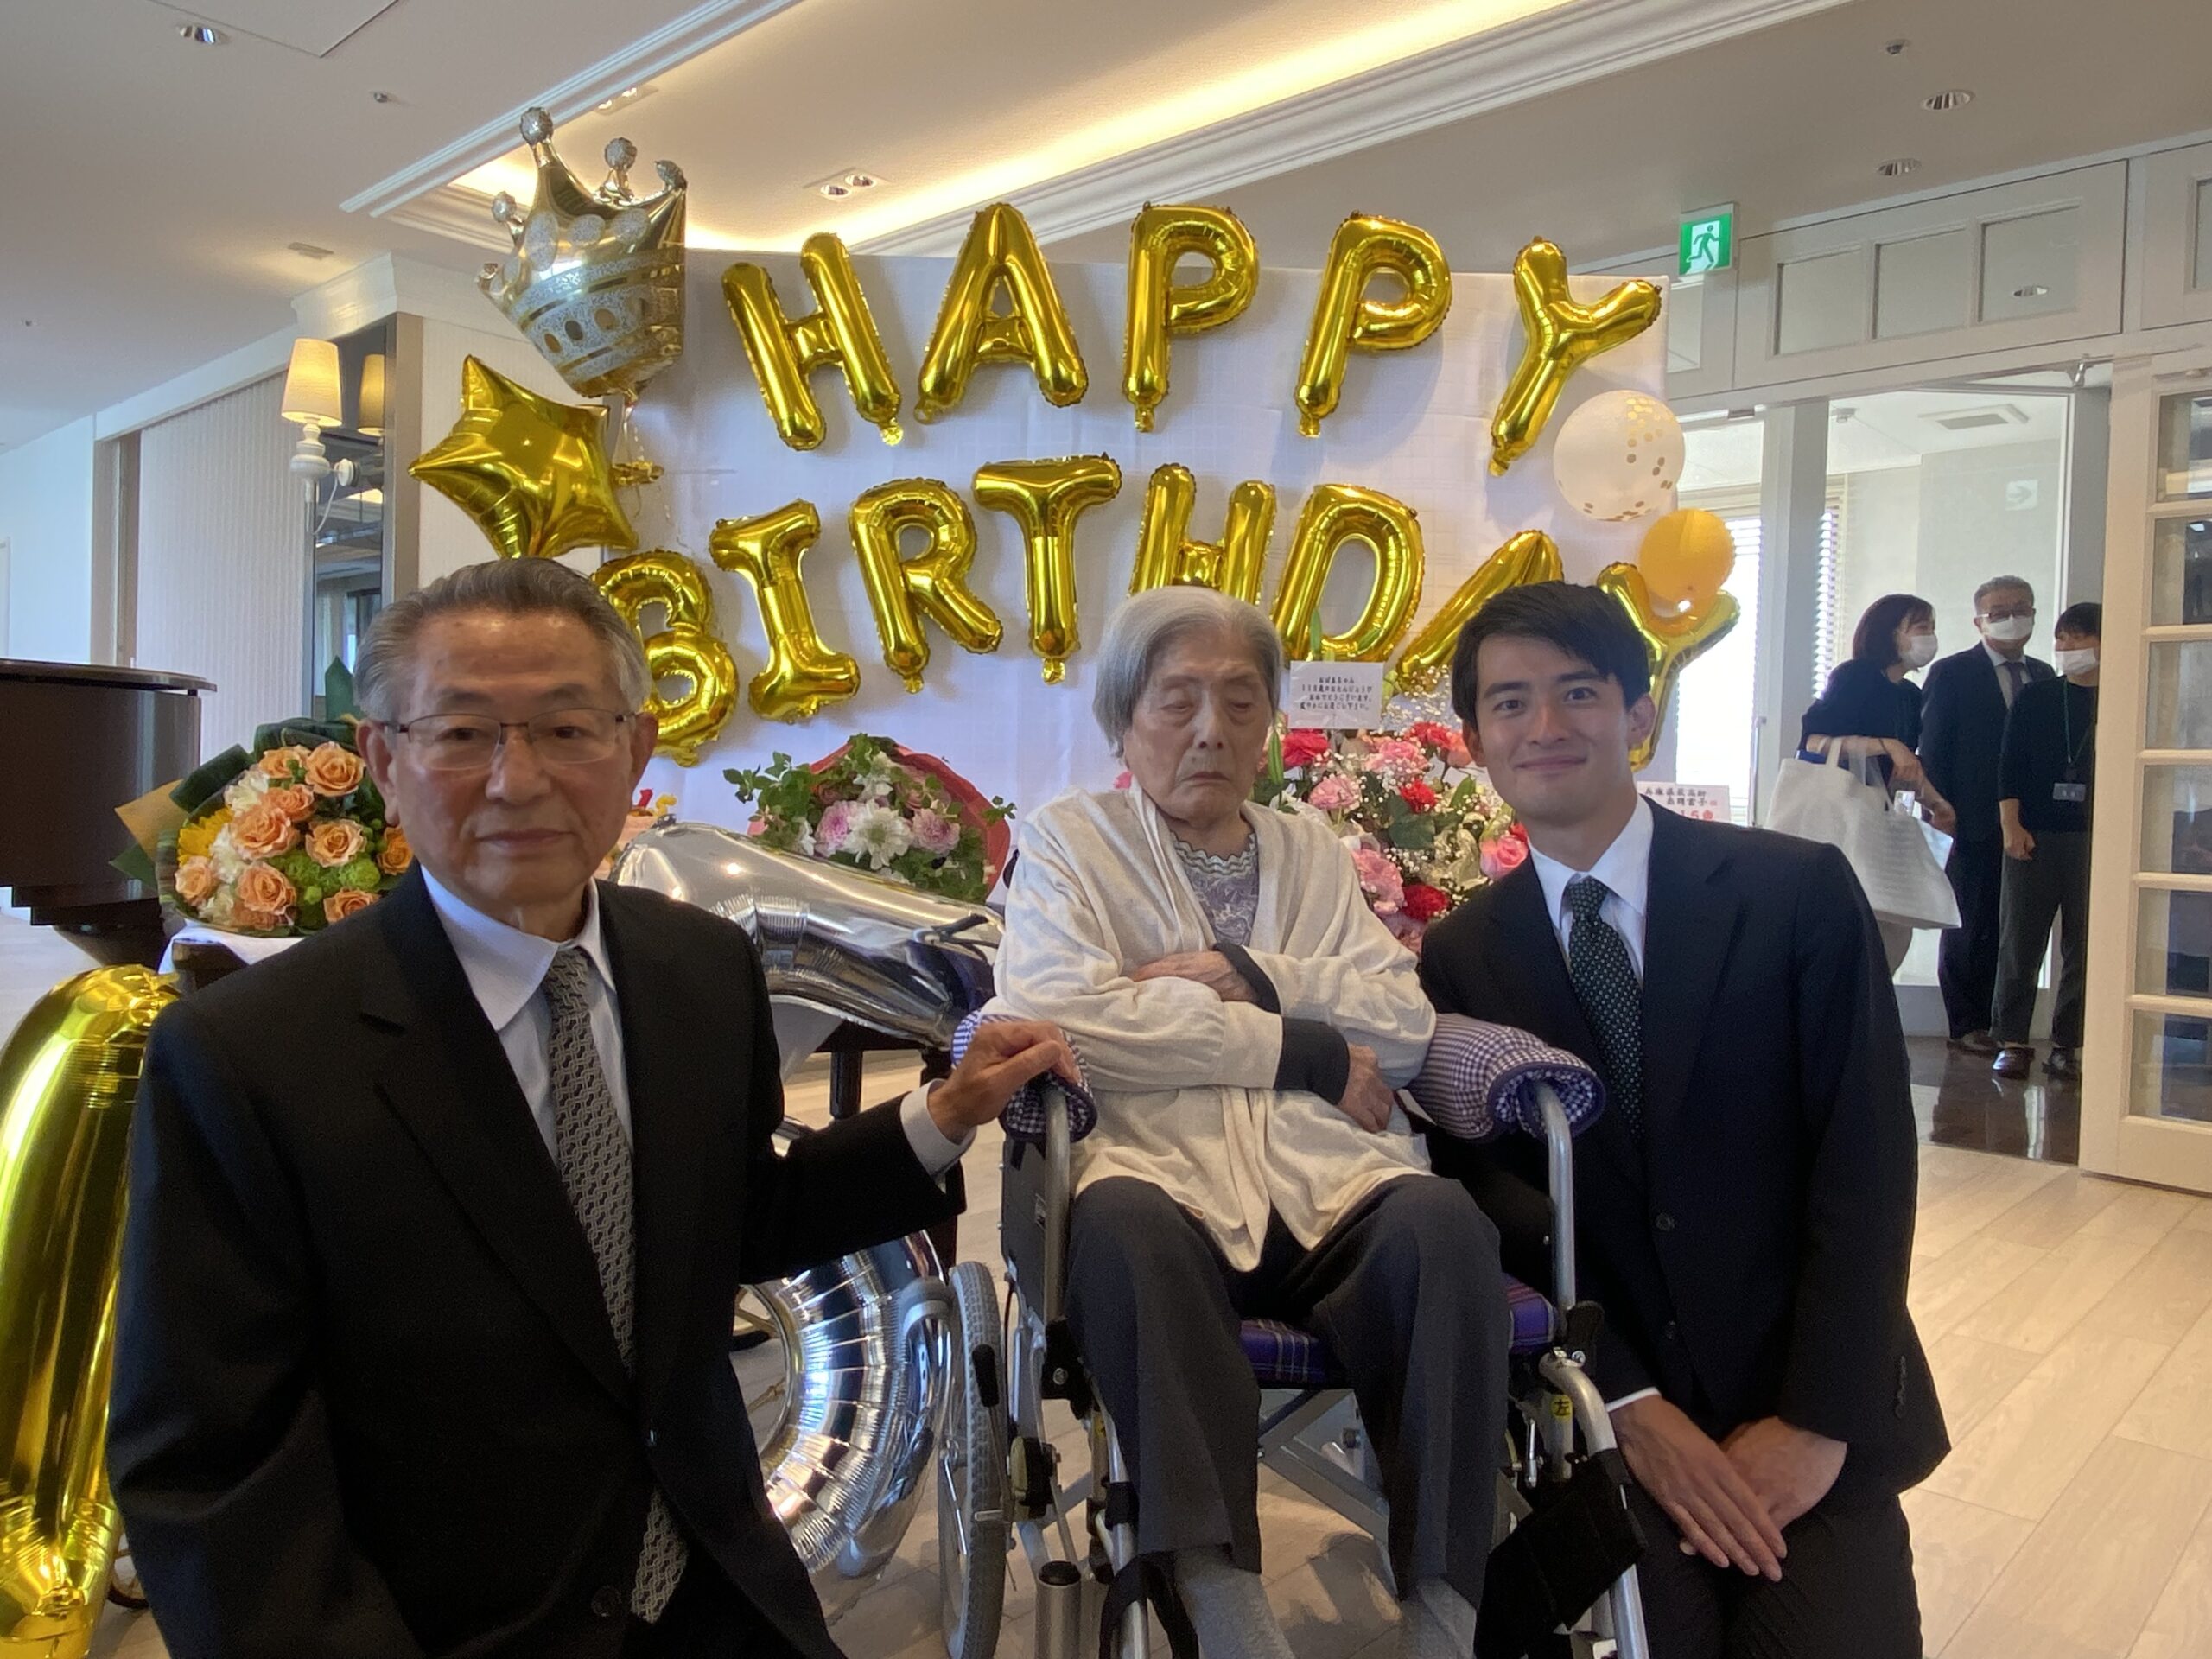 From left to right: Mrs. Itooka's son, Tomiko Itooka, and the Mayor of Ashiya (Source: chikusakai.jp)